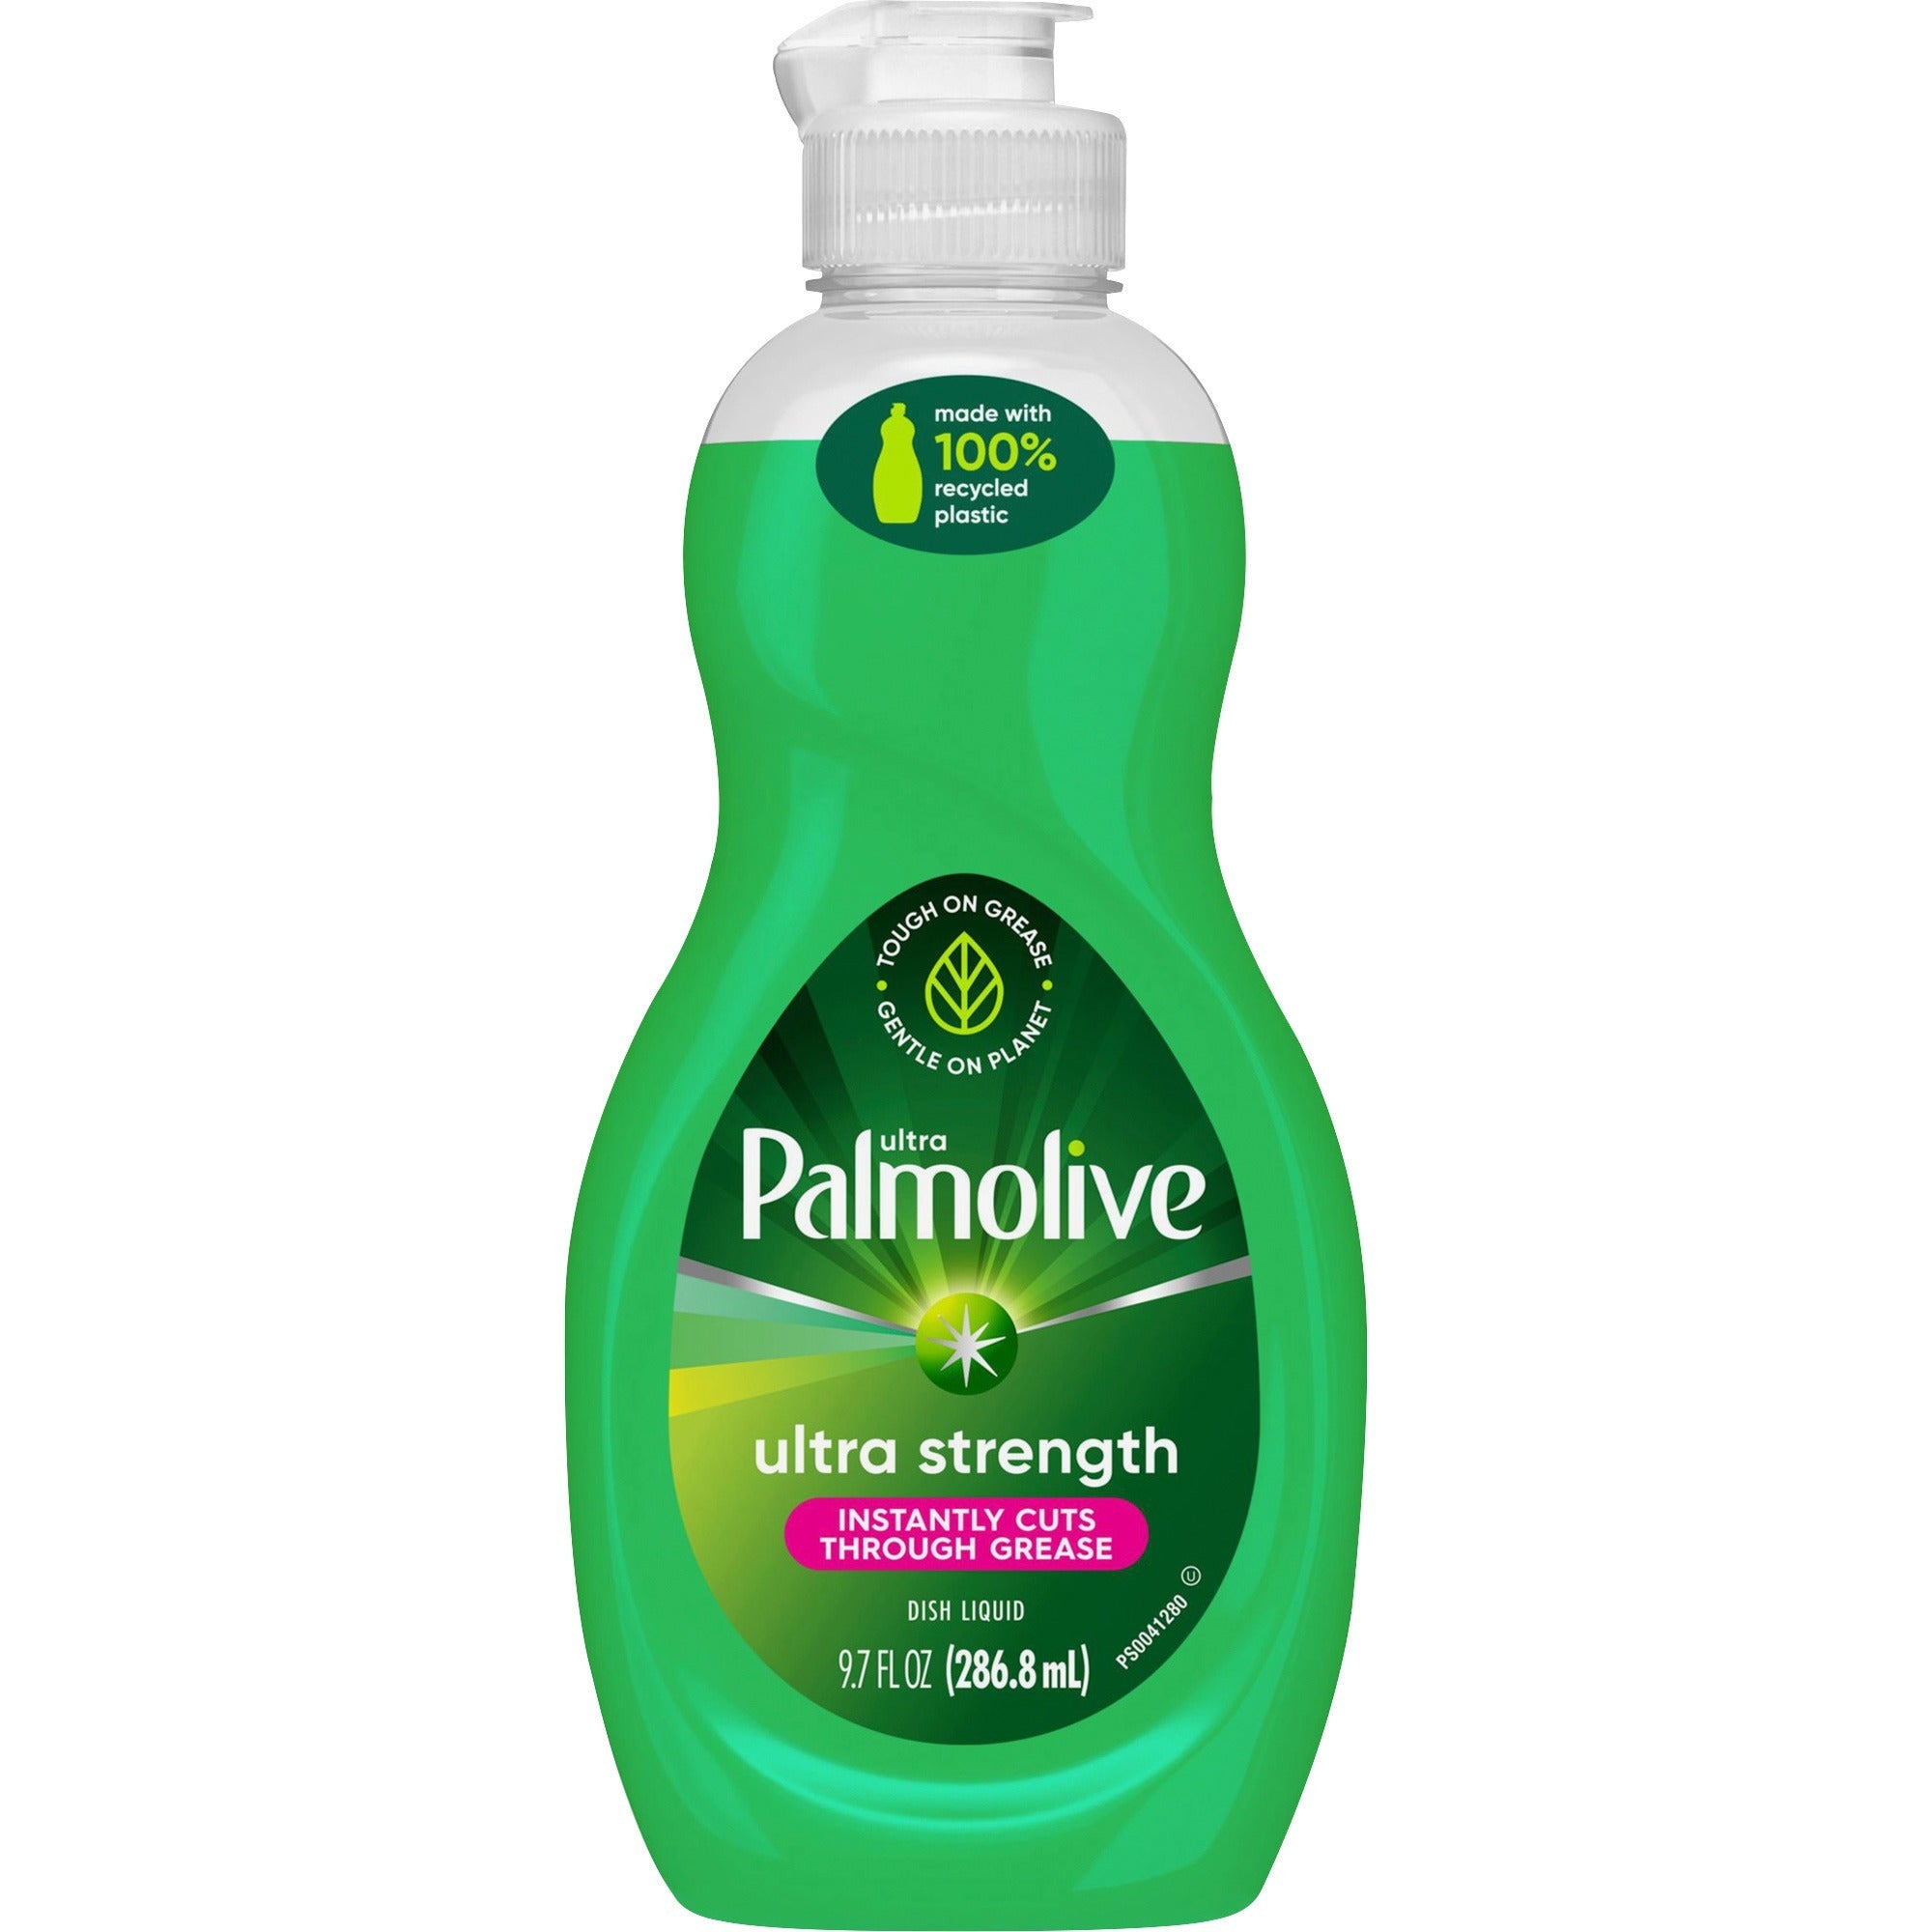 palmolive-ultrastrength-original-dish-soap-97-fl-oz-03-quart-16-carton-phosphate-free-paraben-free-eco-friendly-green_cpc61032015ct - 2